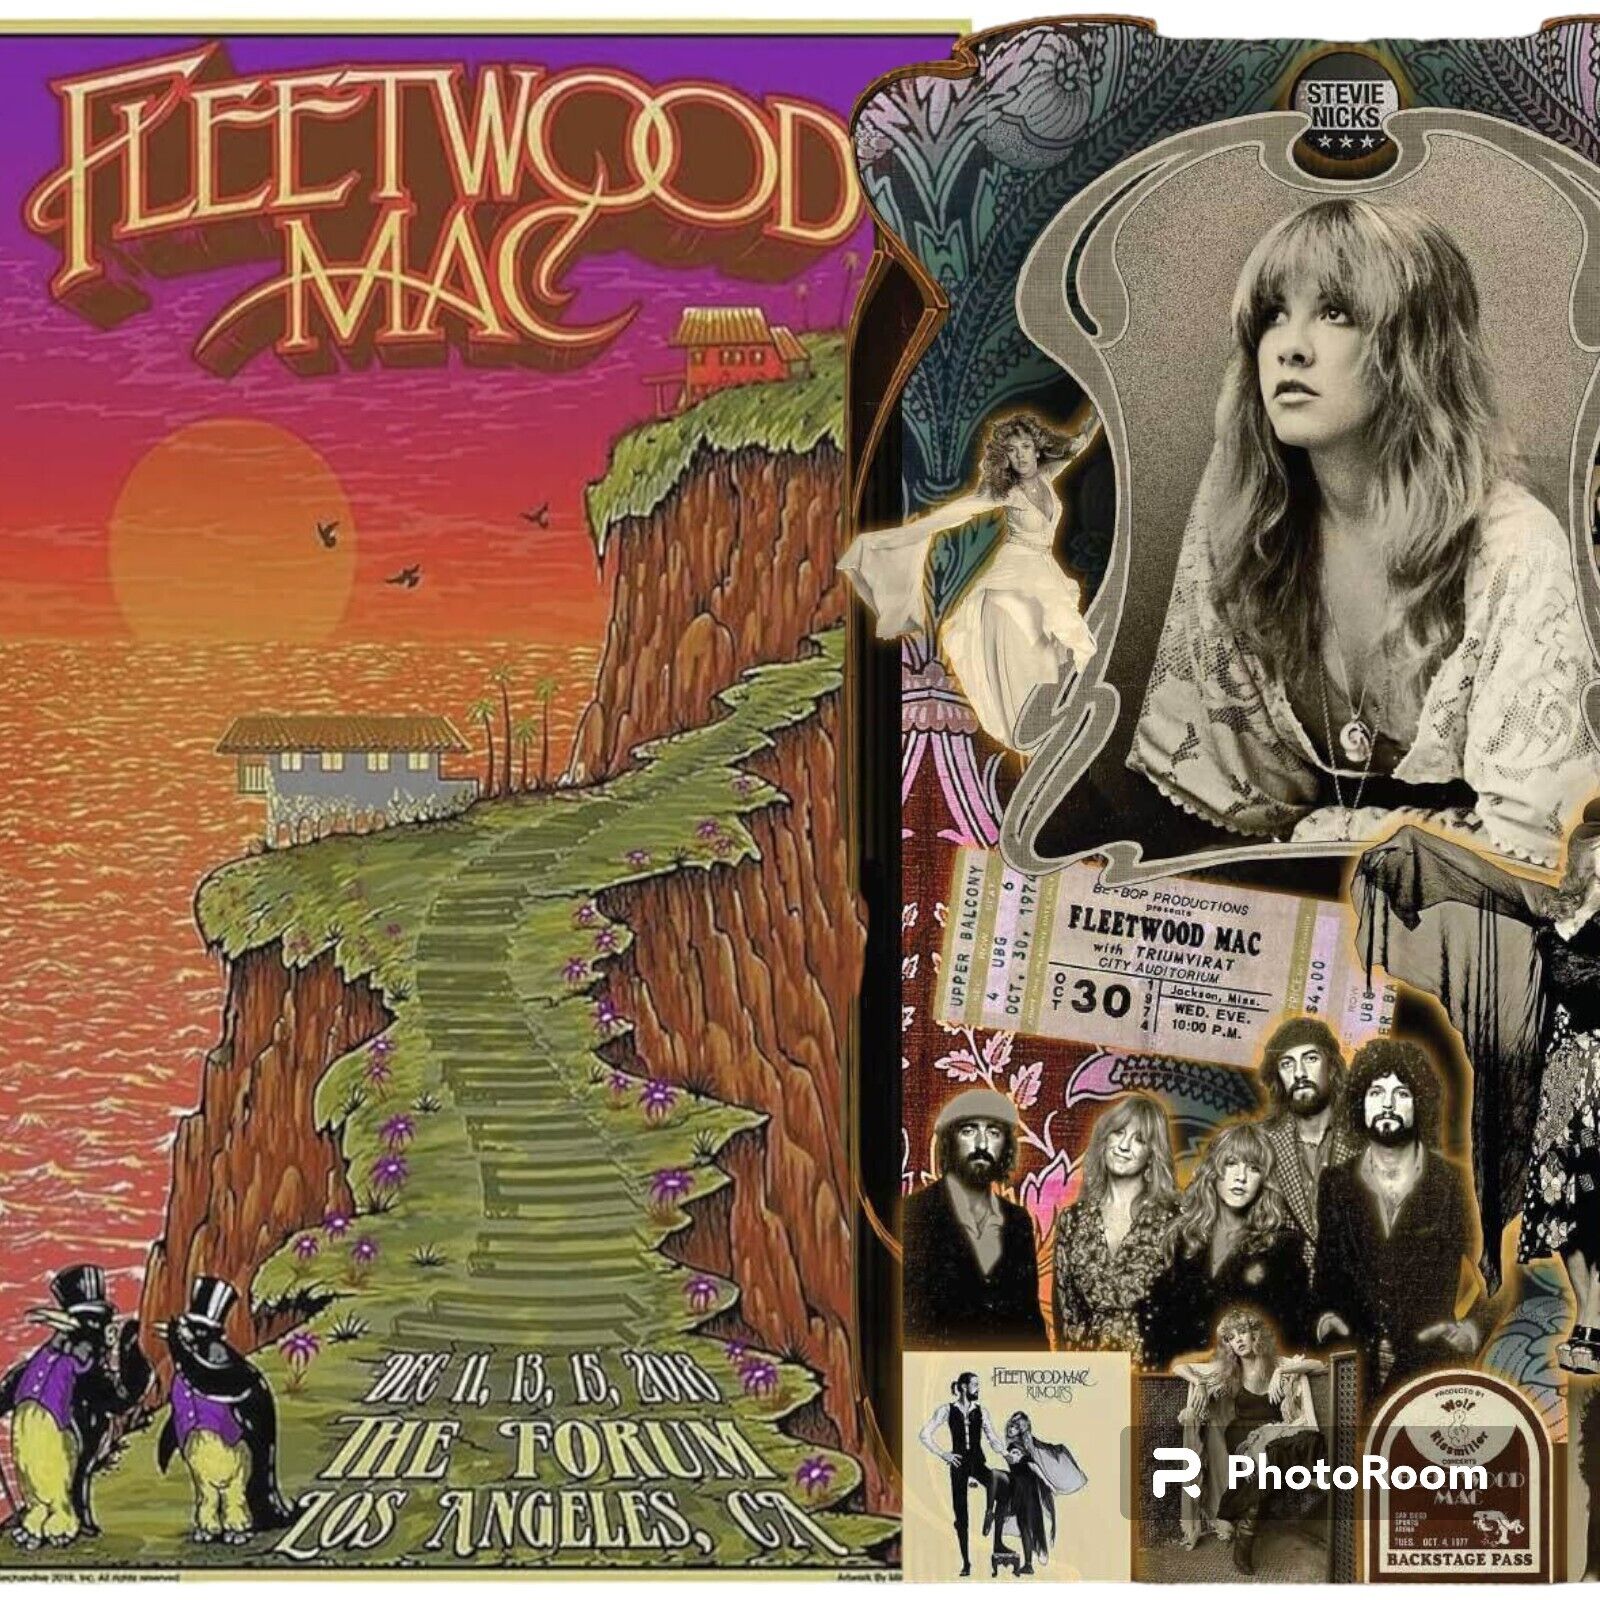 New Stevie Nicks Fleetwood Mac 8x10 Larger Photo Reprint Cool Tour Collect Set